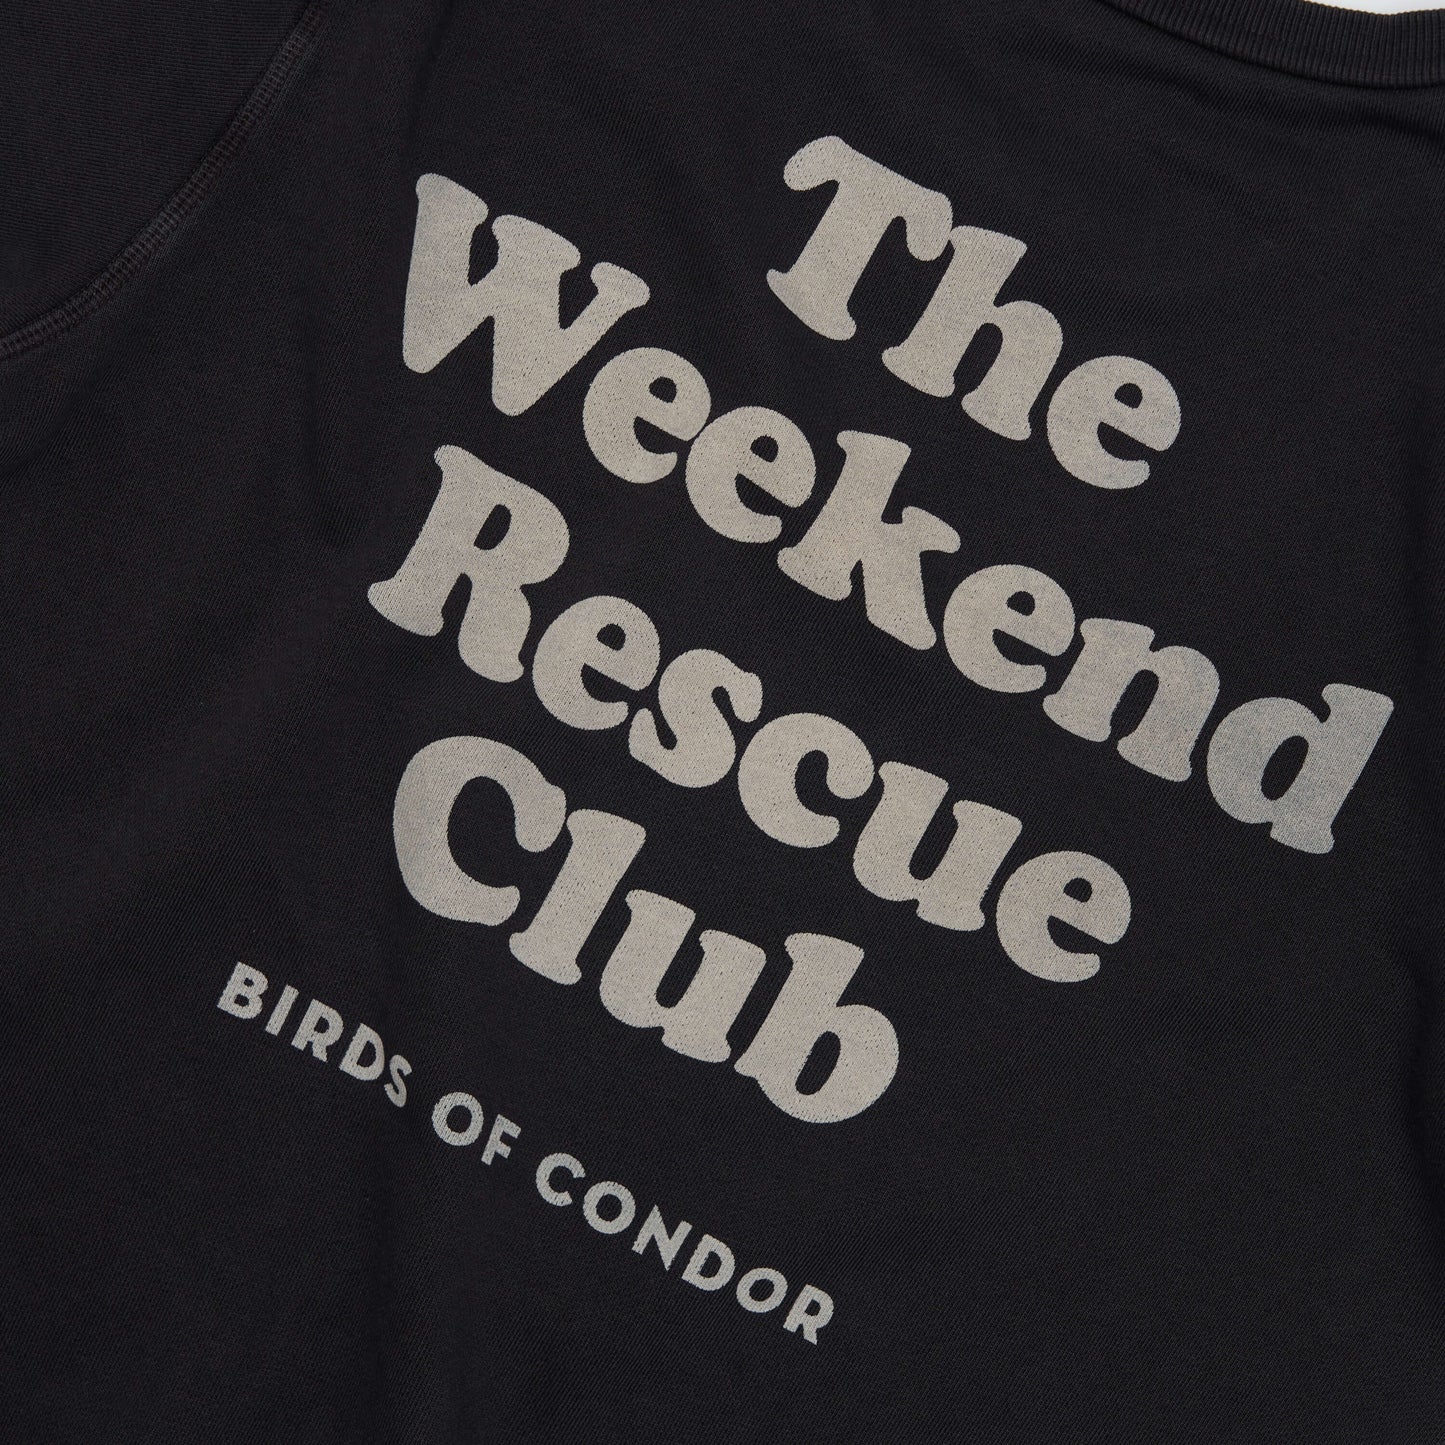 Weekend Rescue Club Sweater